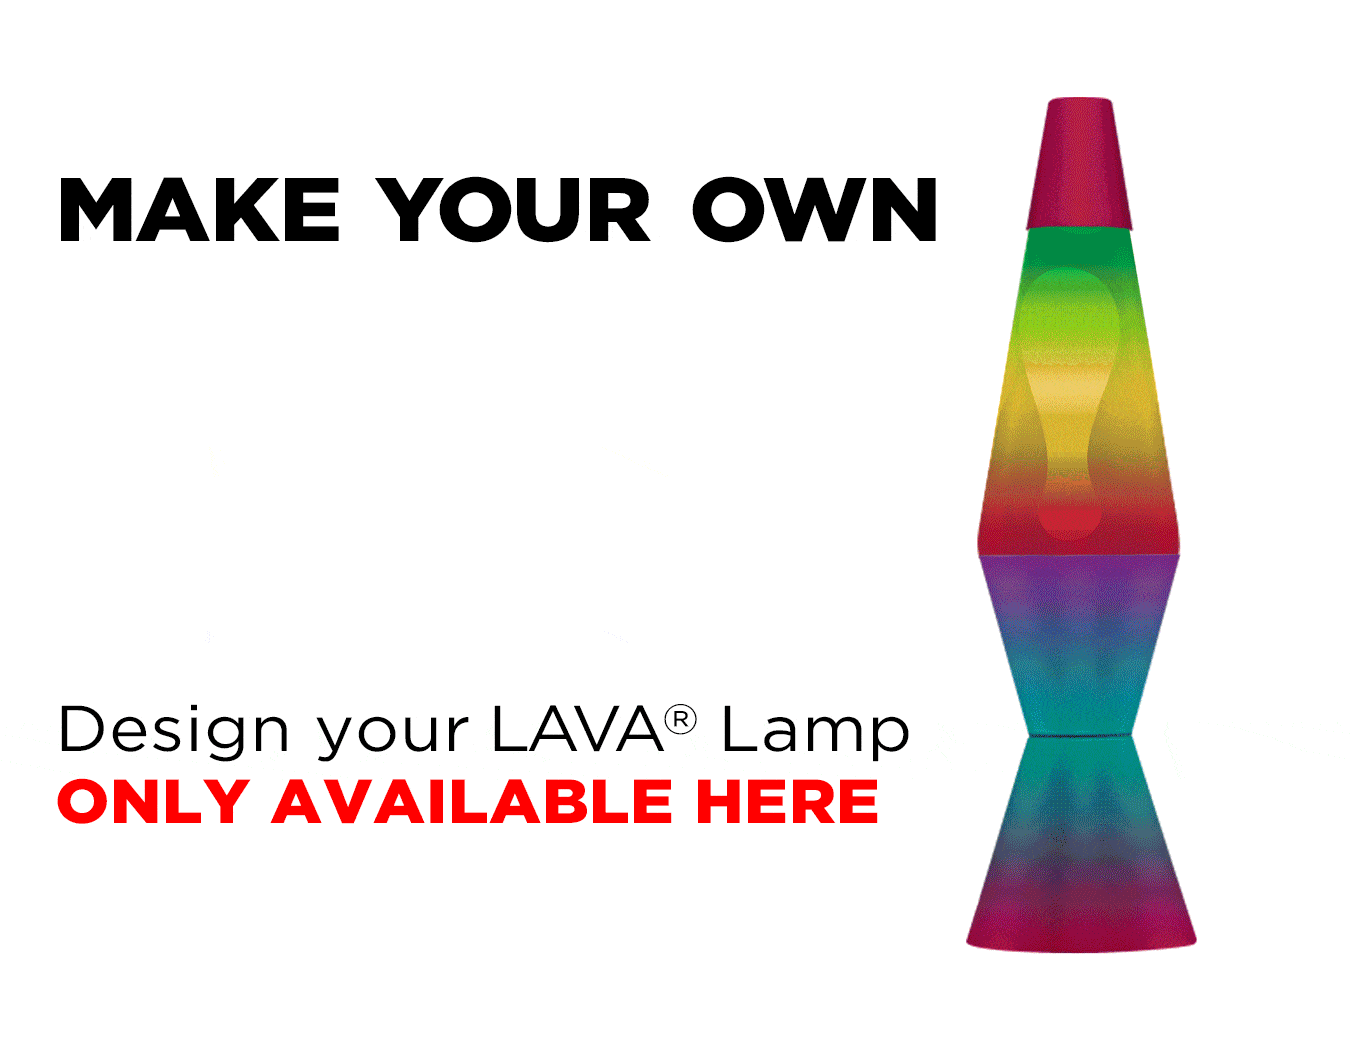 The Original Lava Lamp Company | Fun Decorative Lighting